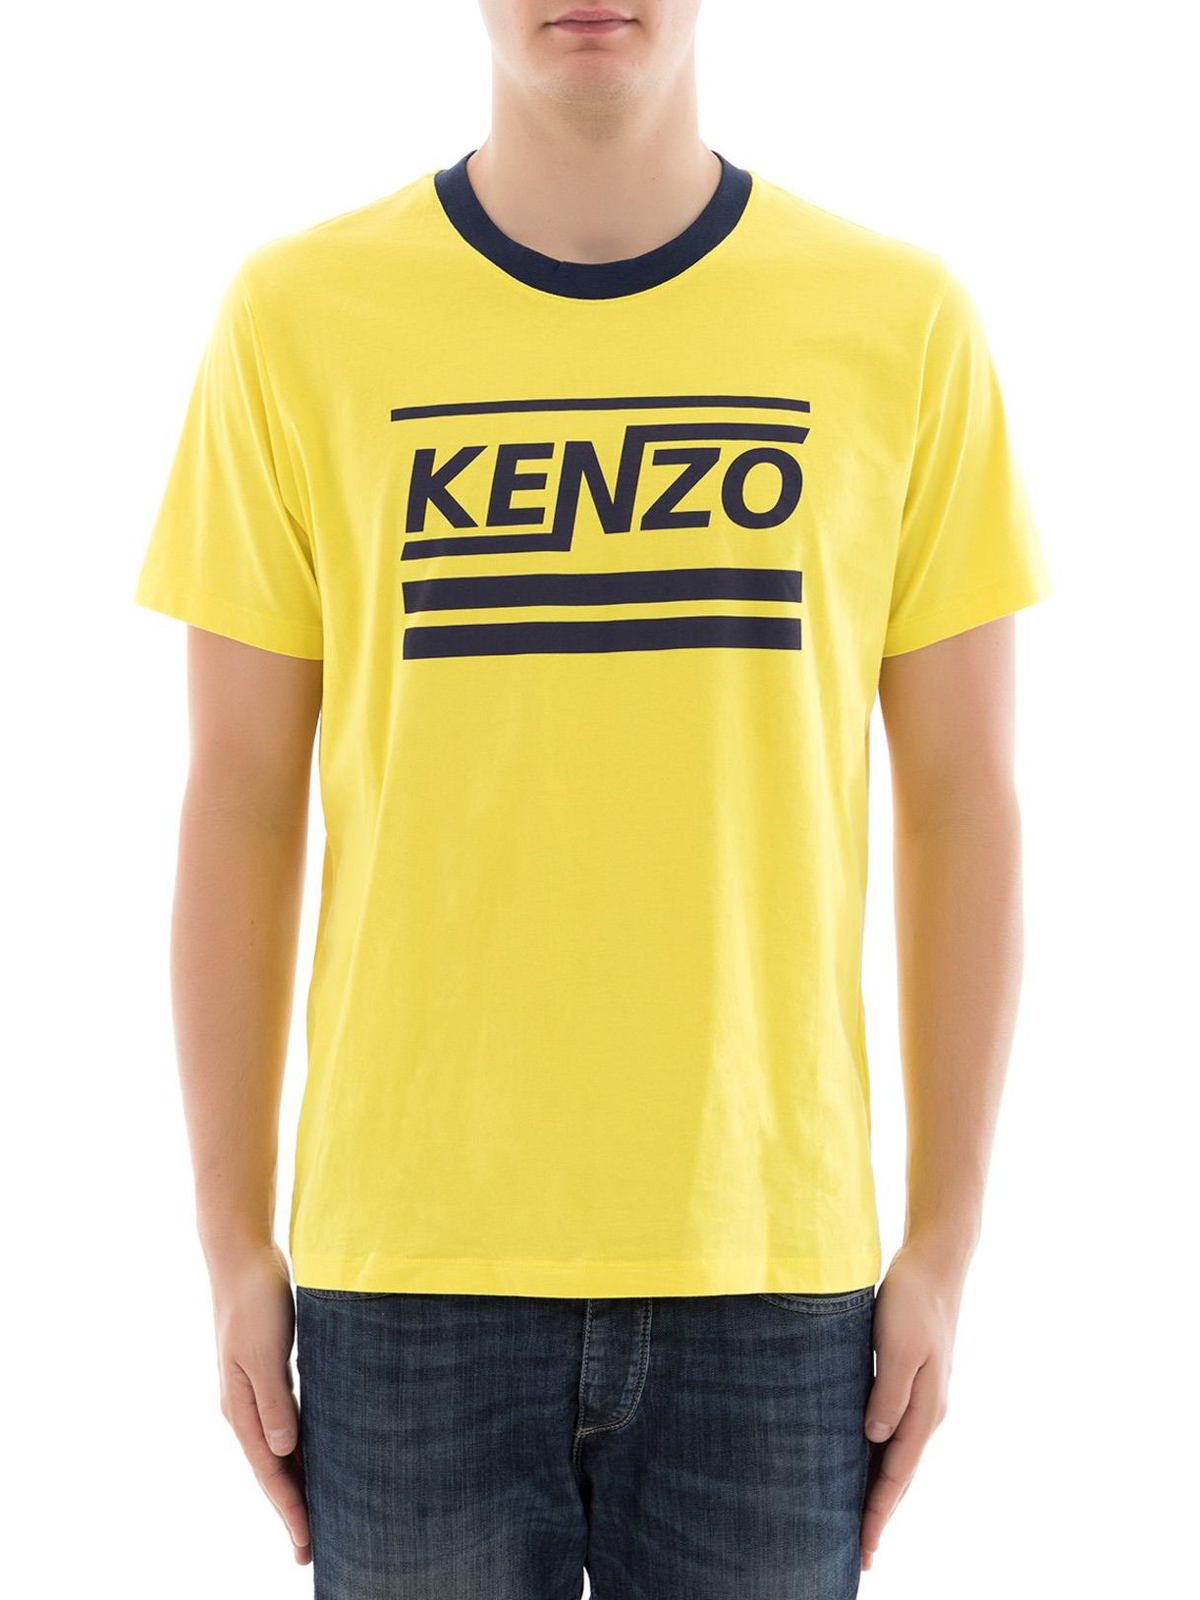 hyper kenzo t shirt